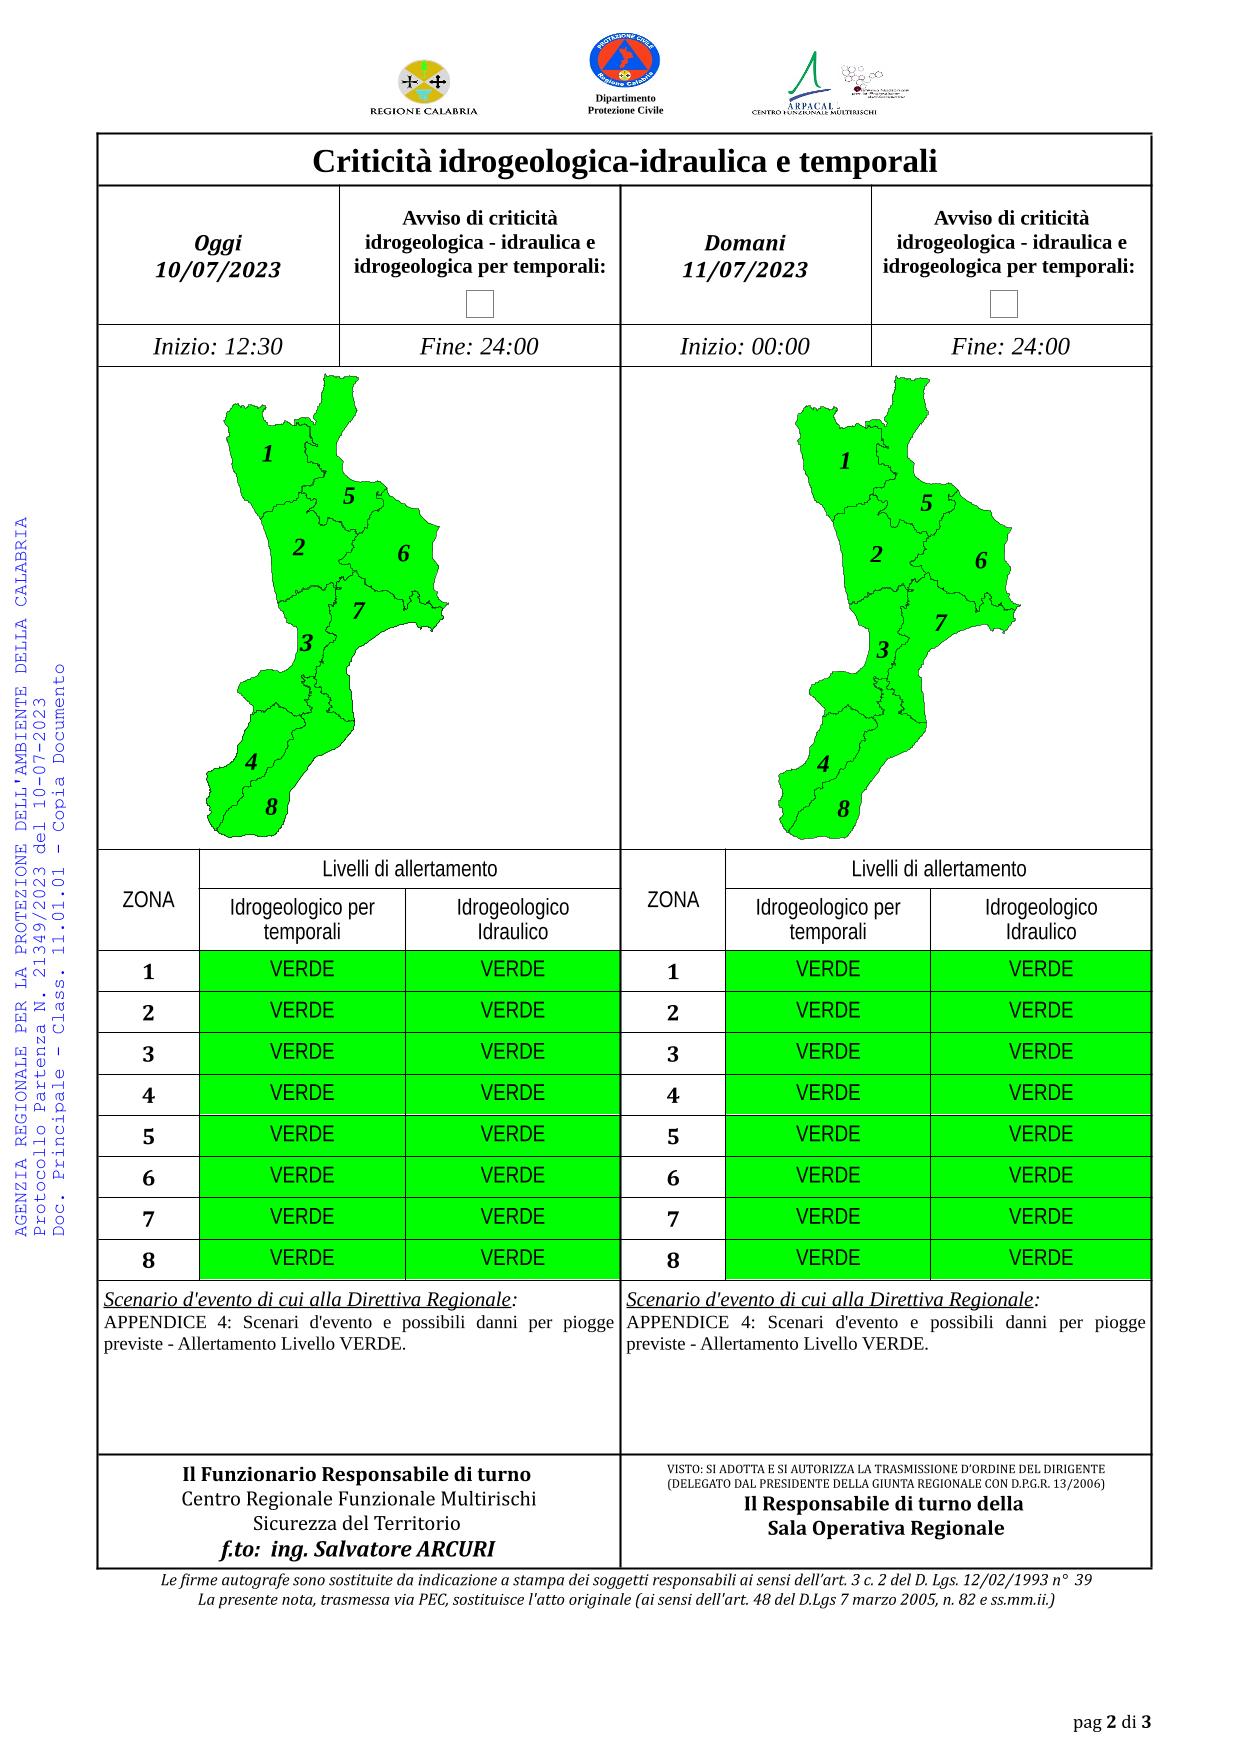 Criticità idrogeologica-idraulica e temporali in Calabria 10-07-2023